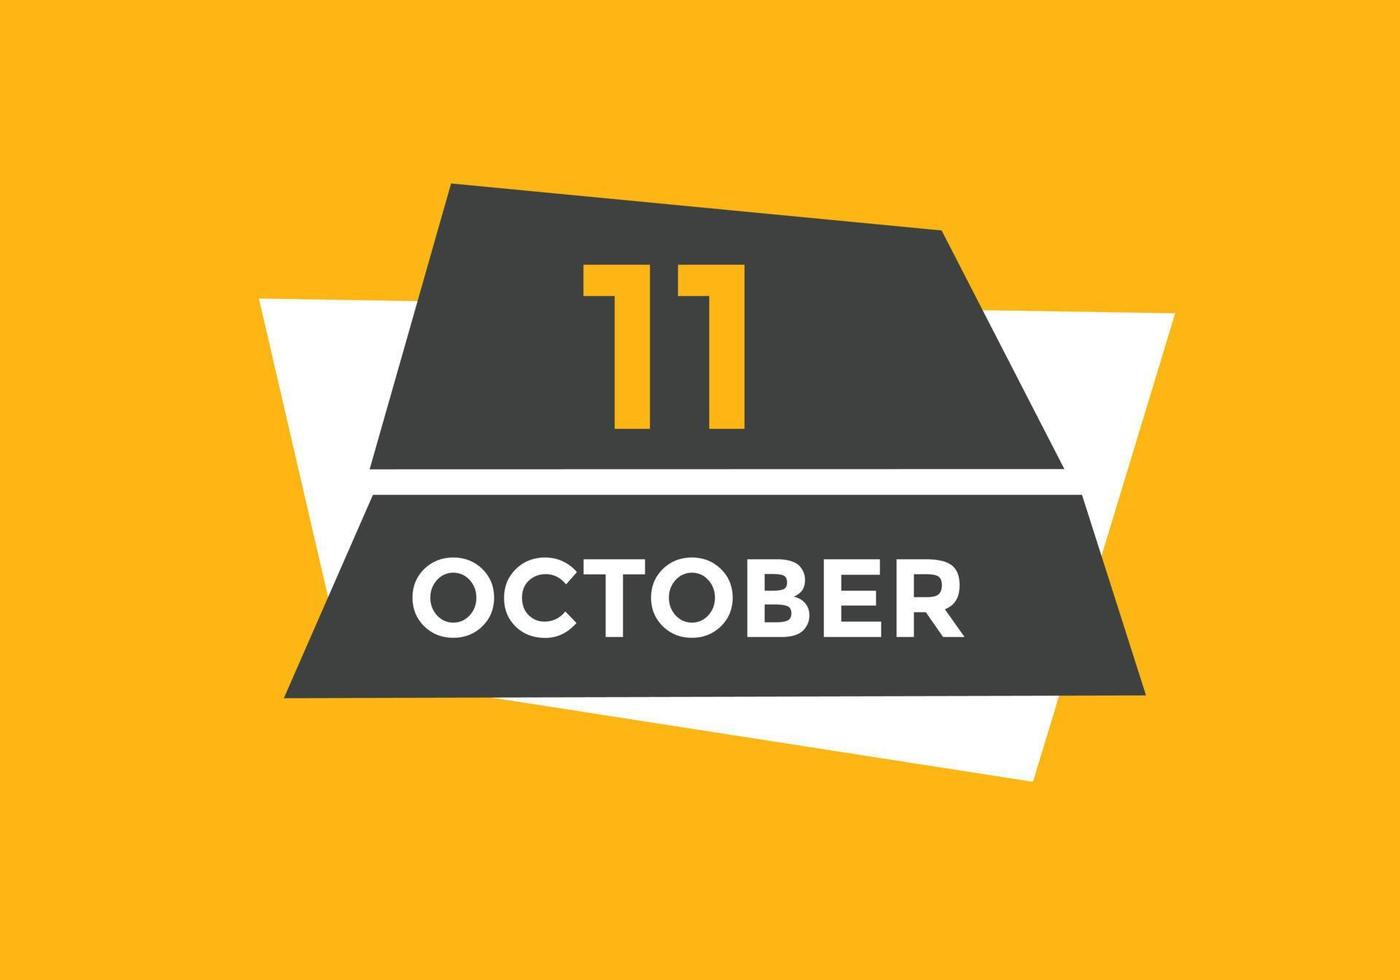 october 11 calendar reminder. 11th october daily calendar icon template. Calendar 11th october icon Design template. Vector illustration